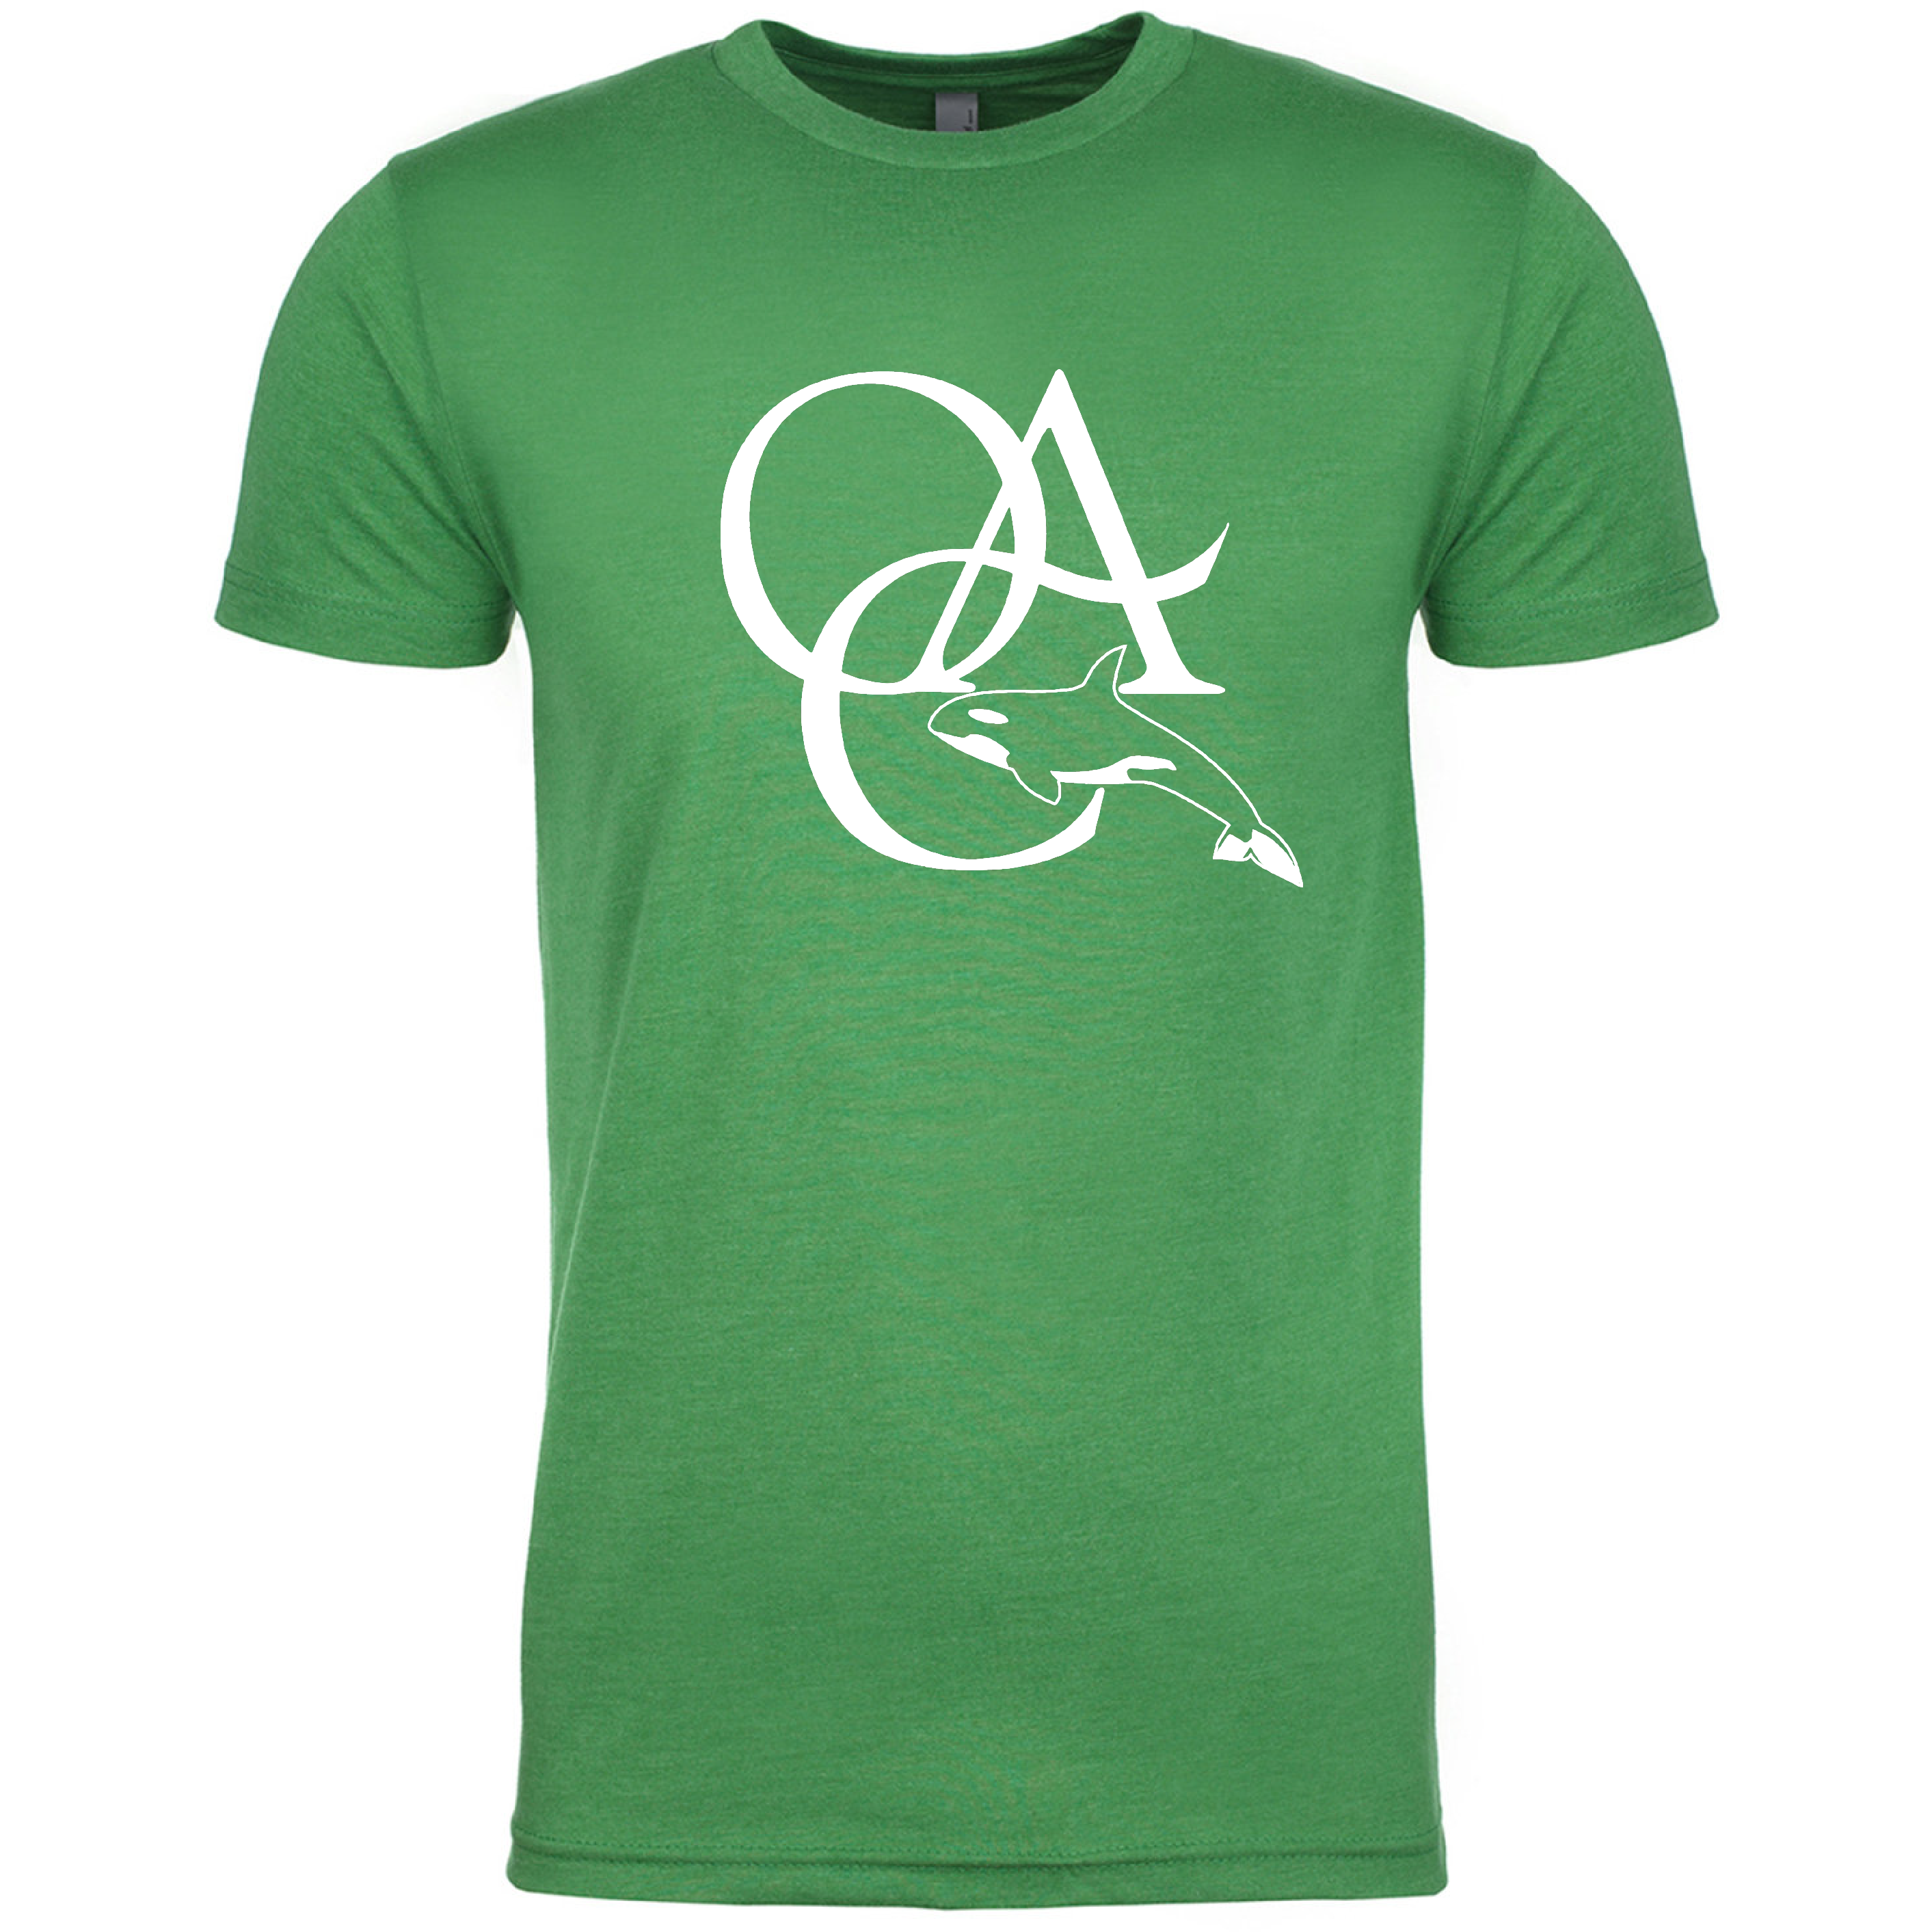 Team T-Shirt - OAC